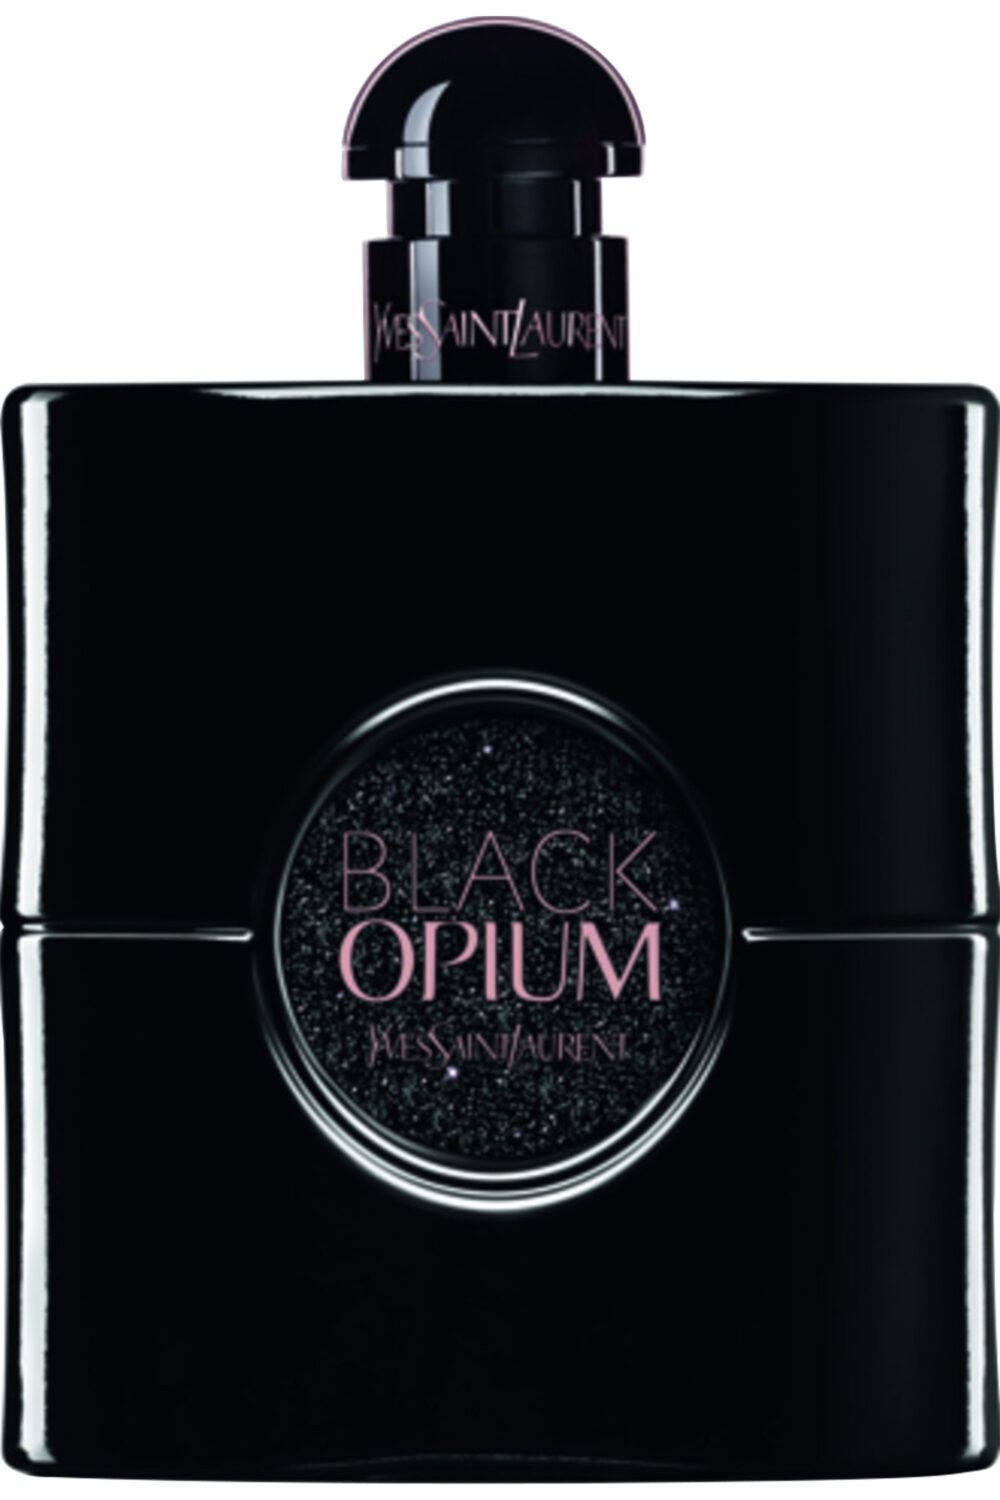 Yves Saint Laurent - Black Opium Le Parfum 30ml